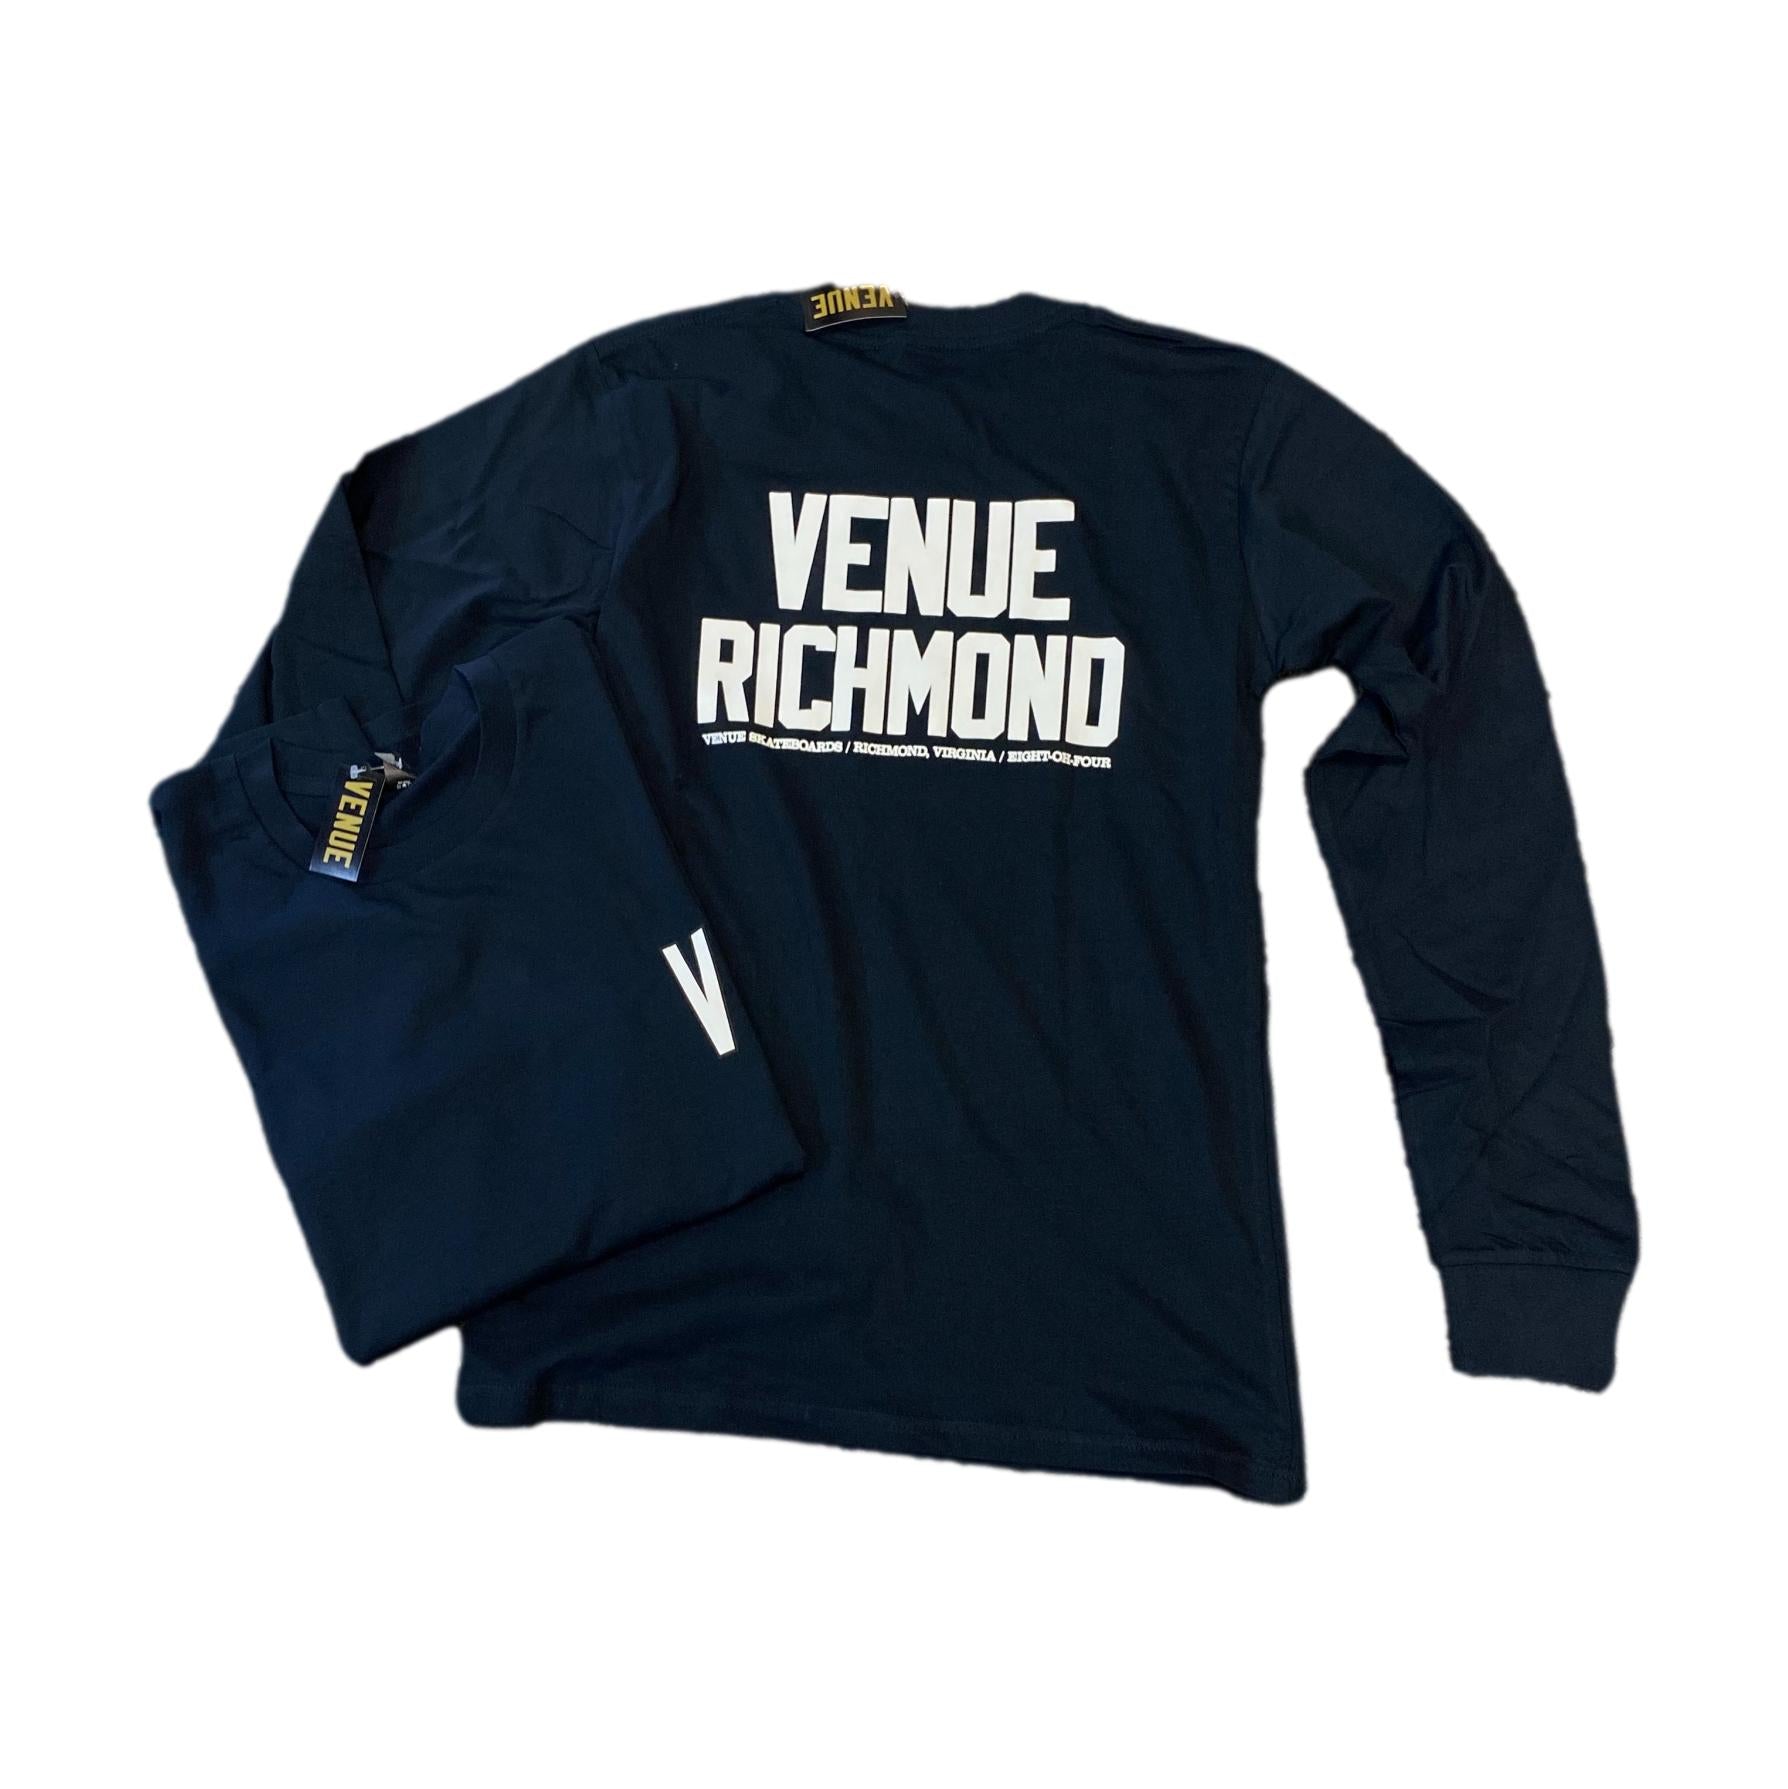 Venue "Venue Richmond" Longsleeve T-Shirt Navy - Venue Skateboards